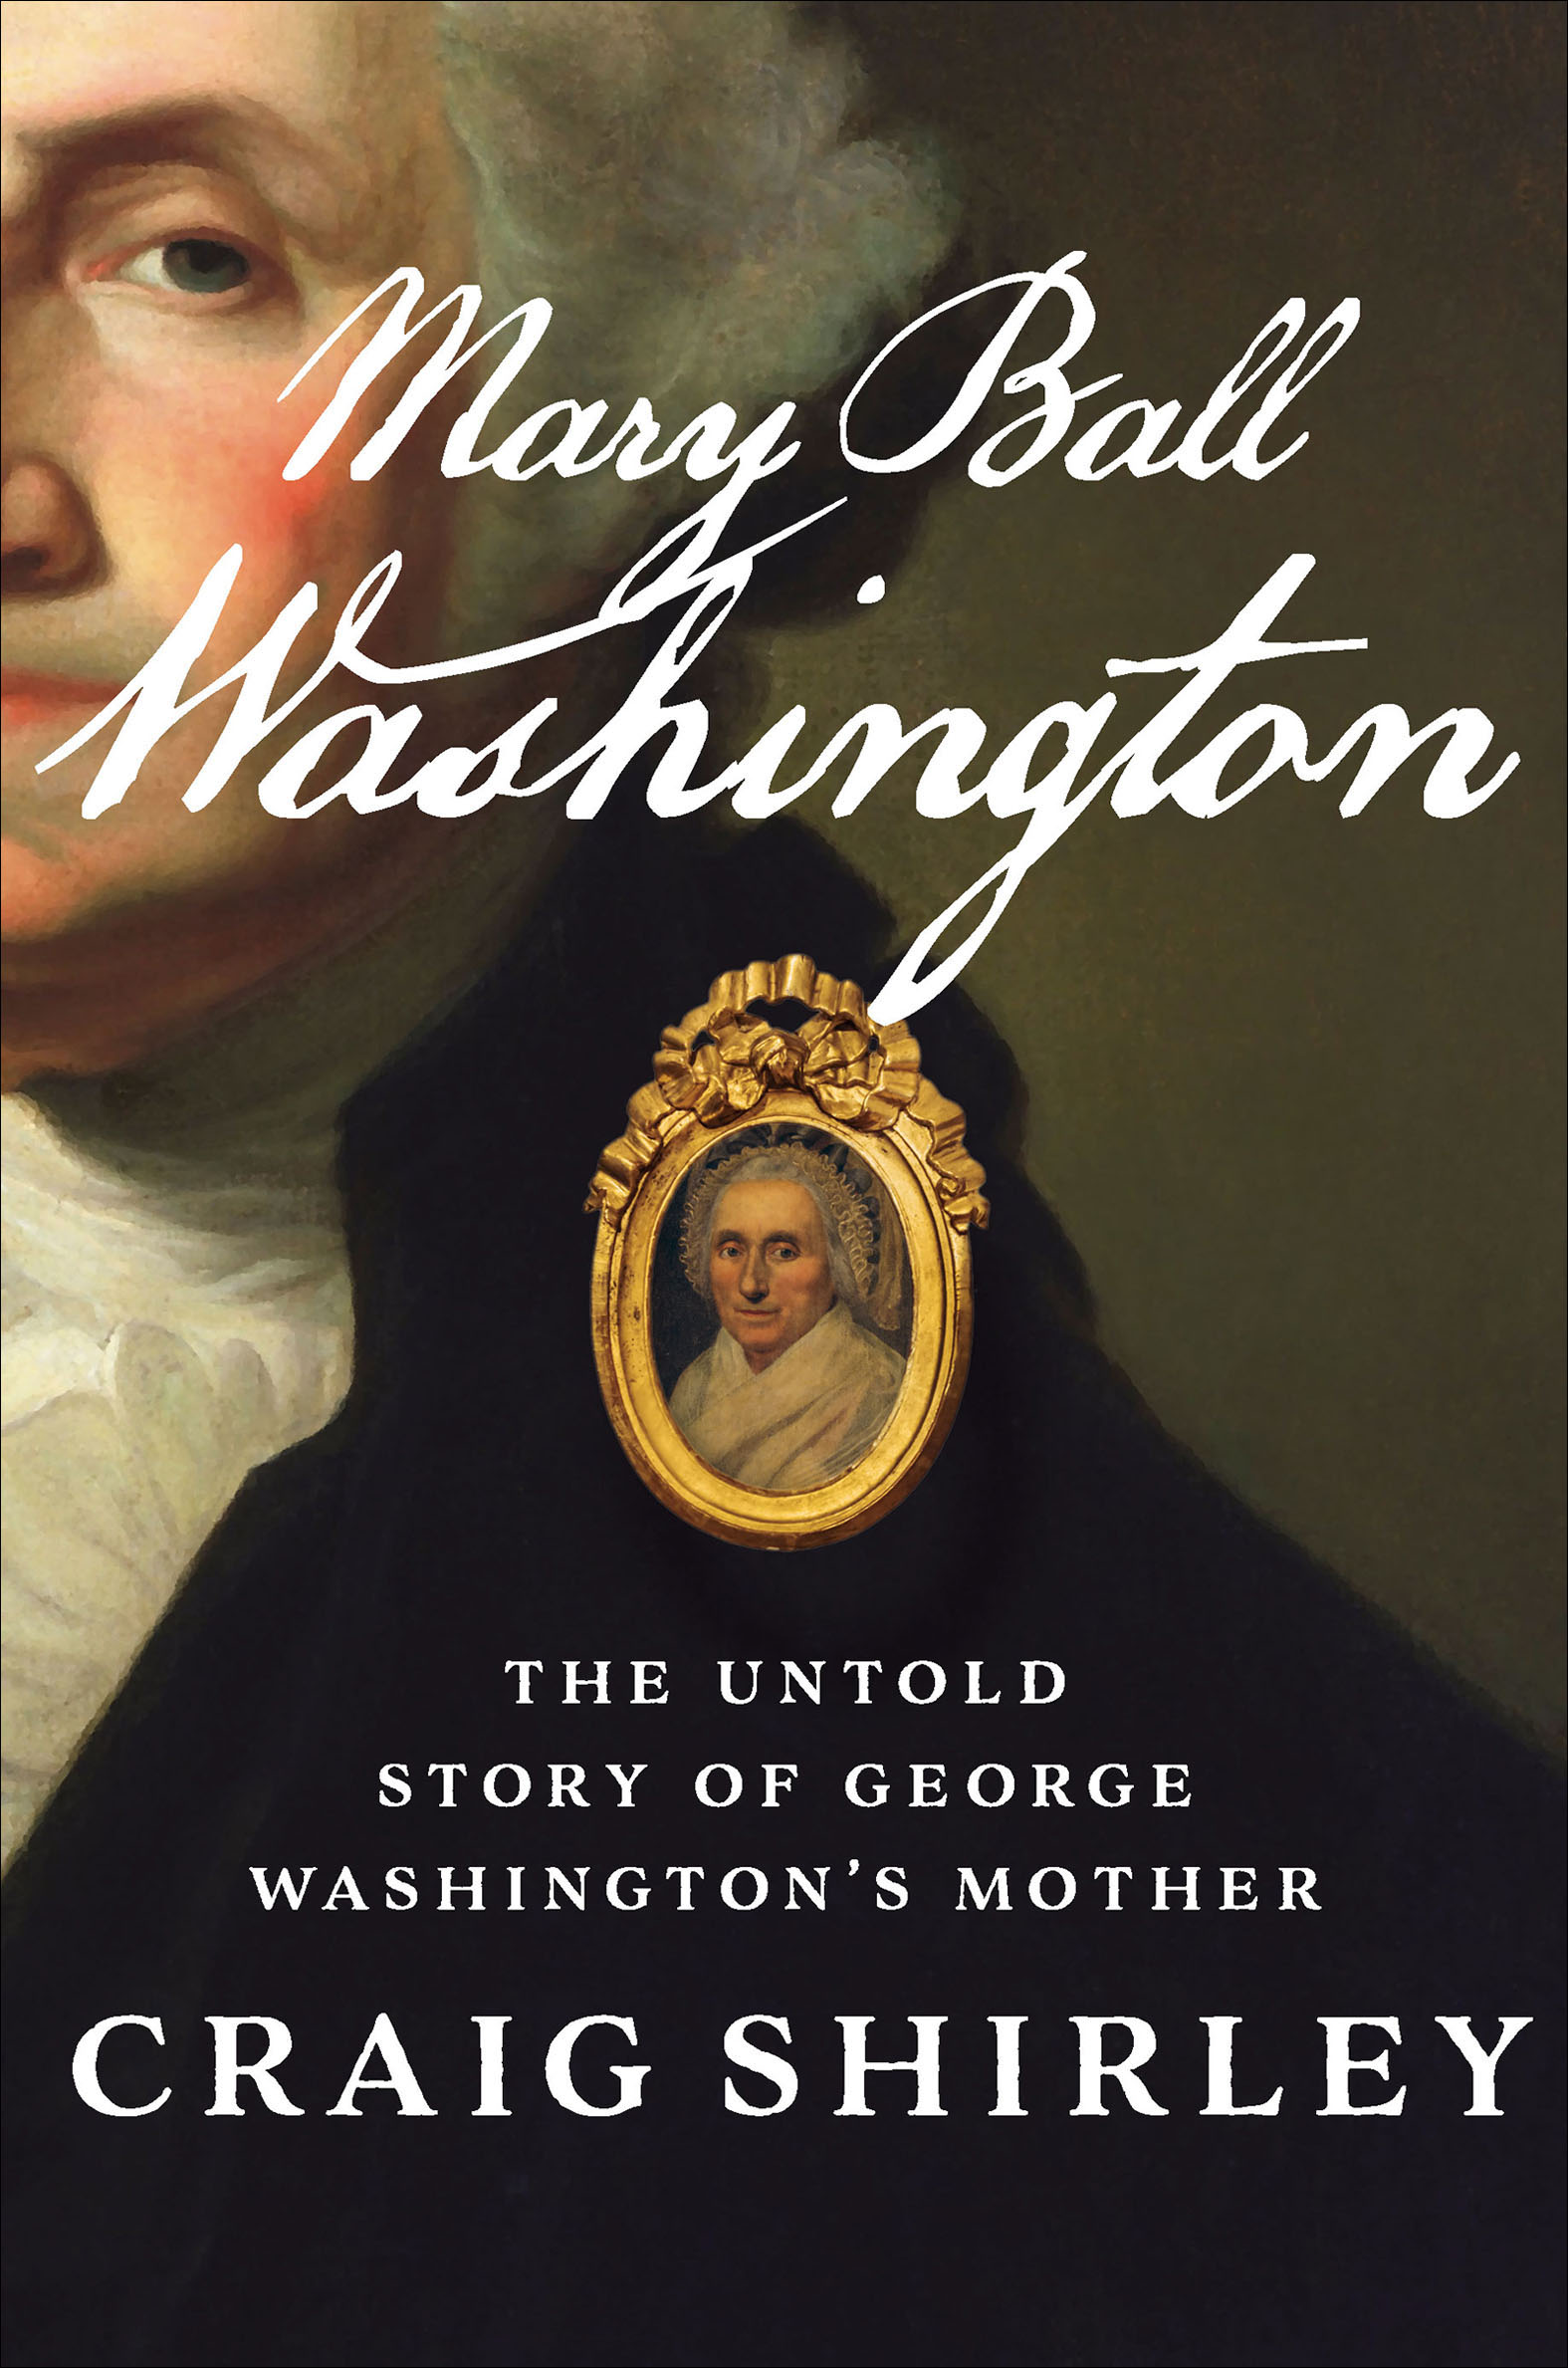 Mary Ball Washington the untold story of George Washington's mother cover image